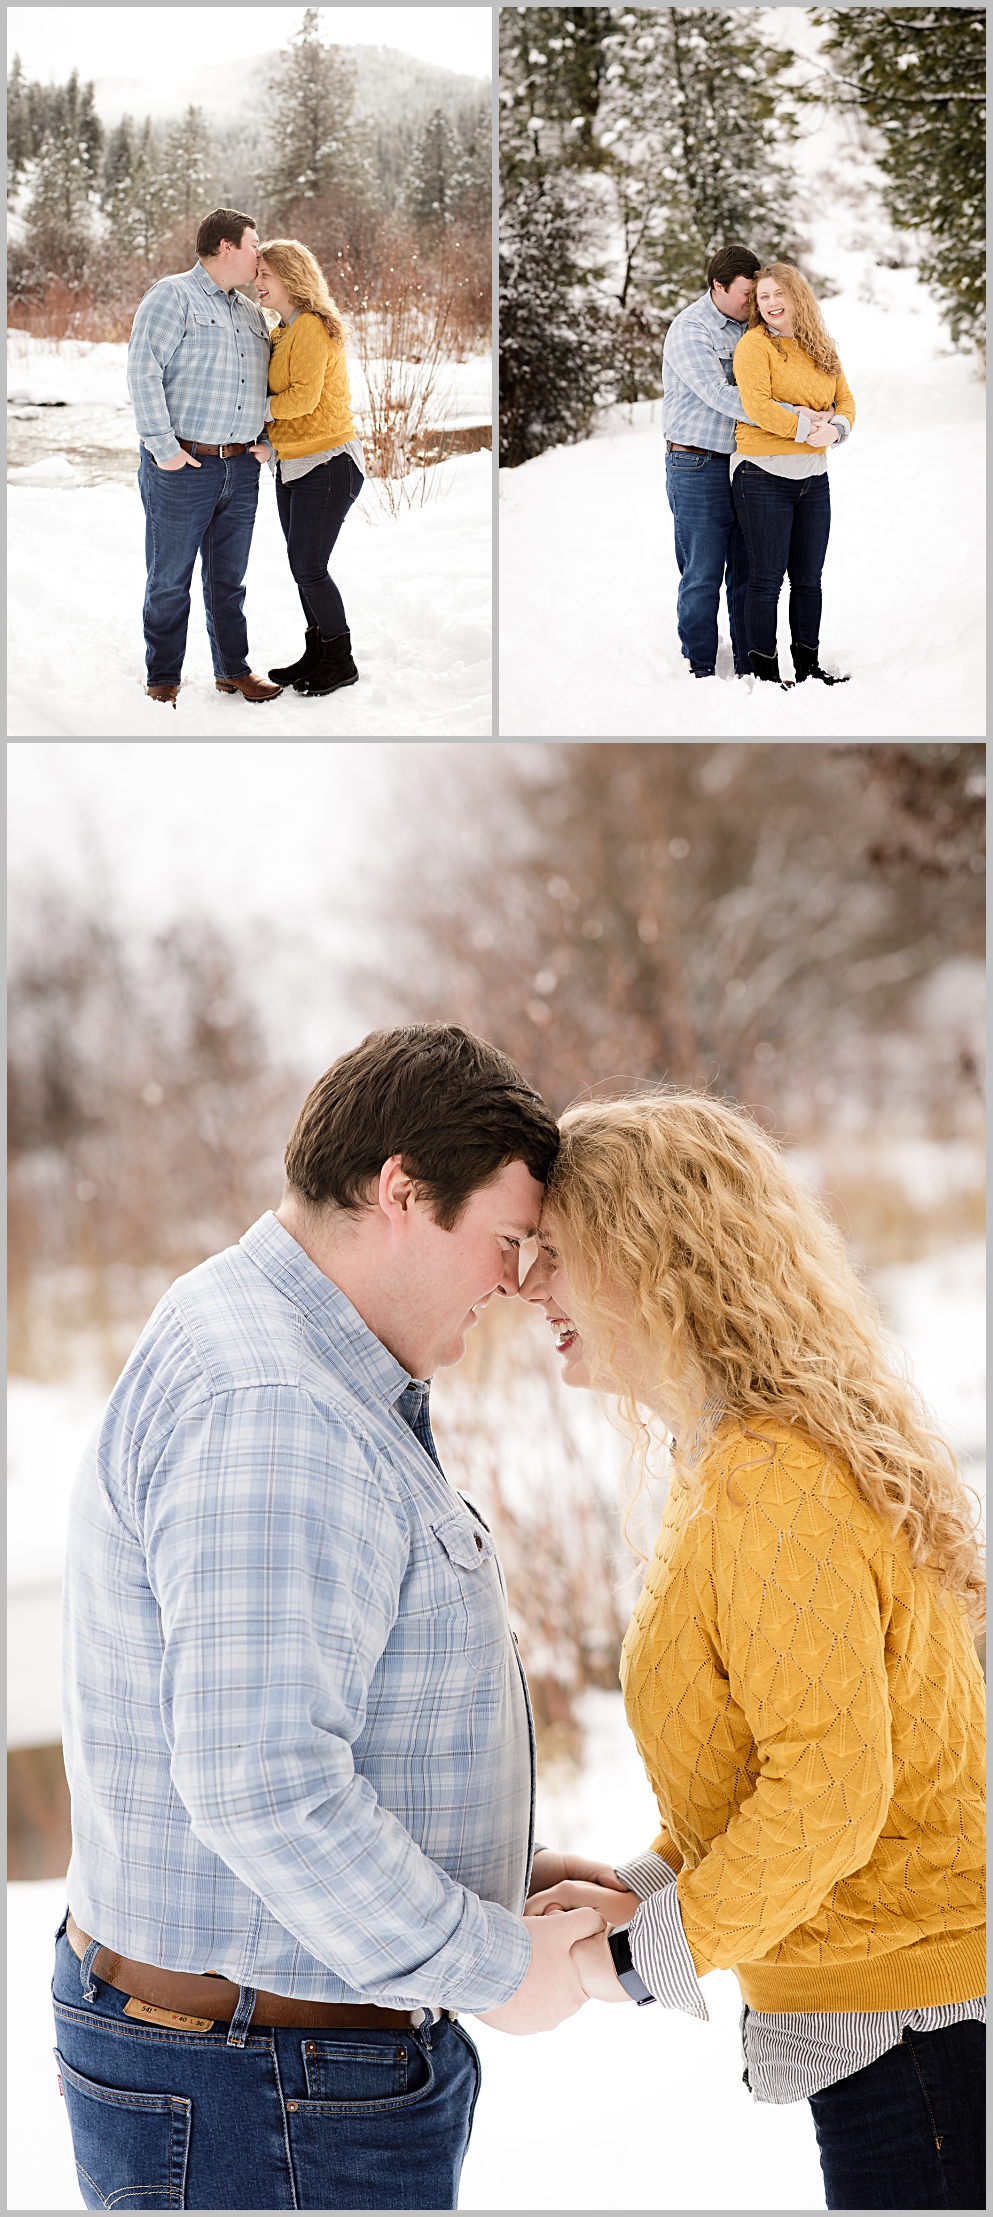 Snowy winter engagement shoot